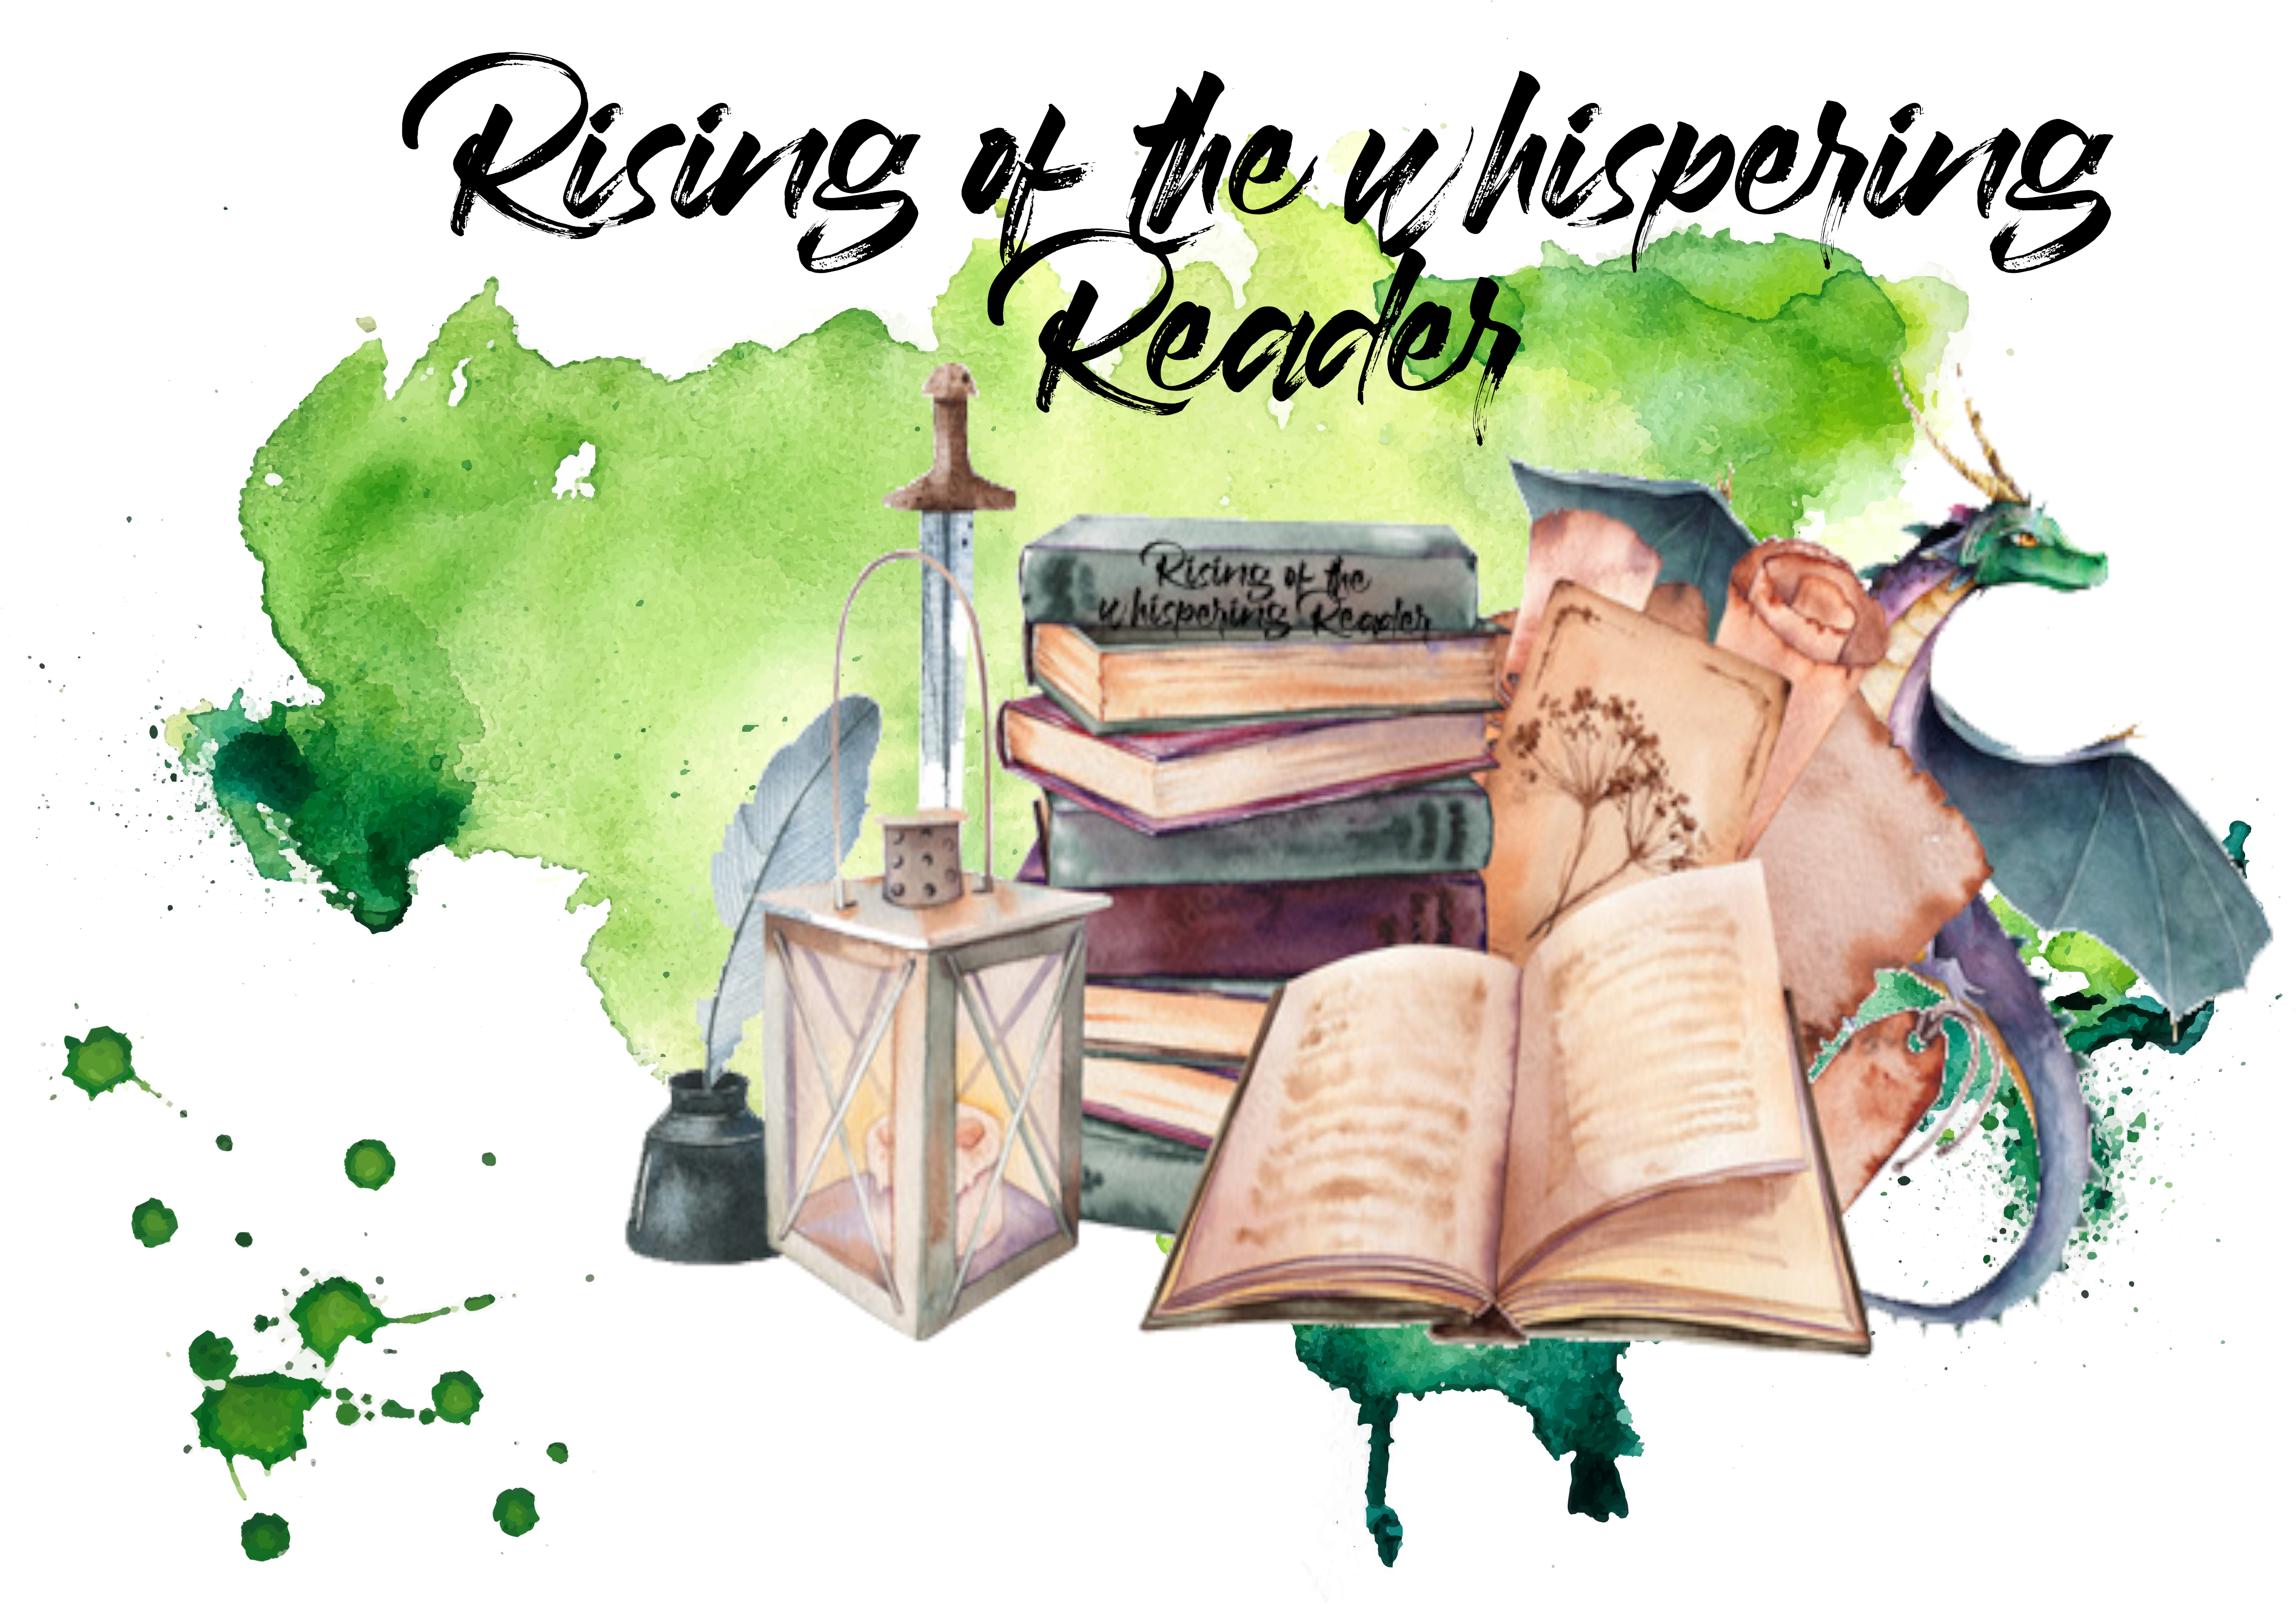 Rising of the whispering Reader – Aufgaben im Juni